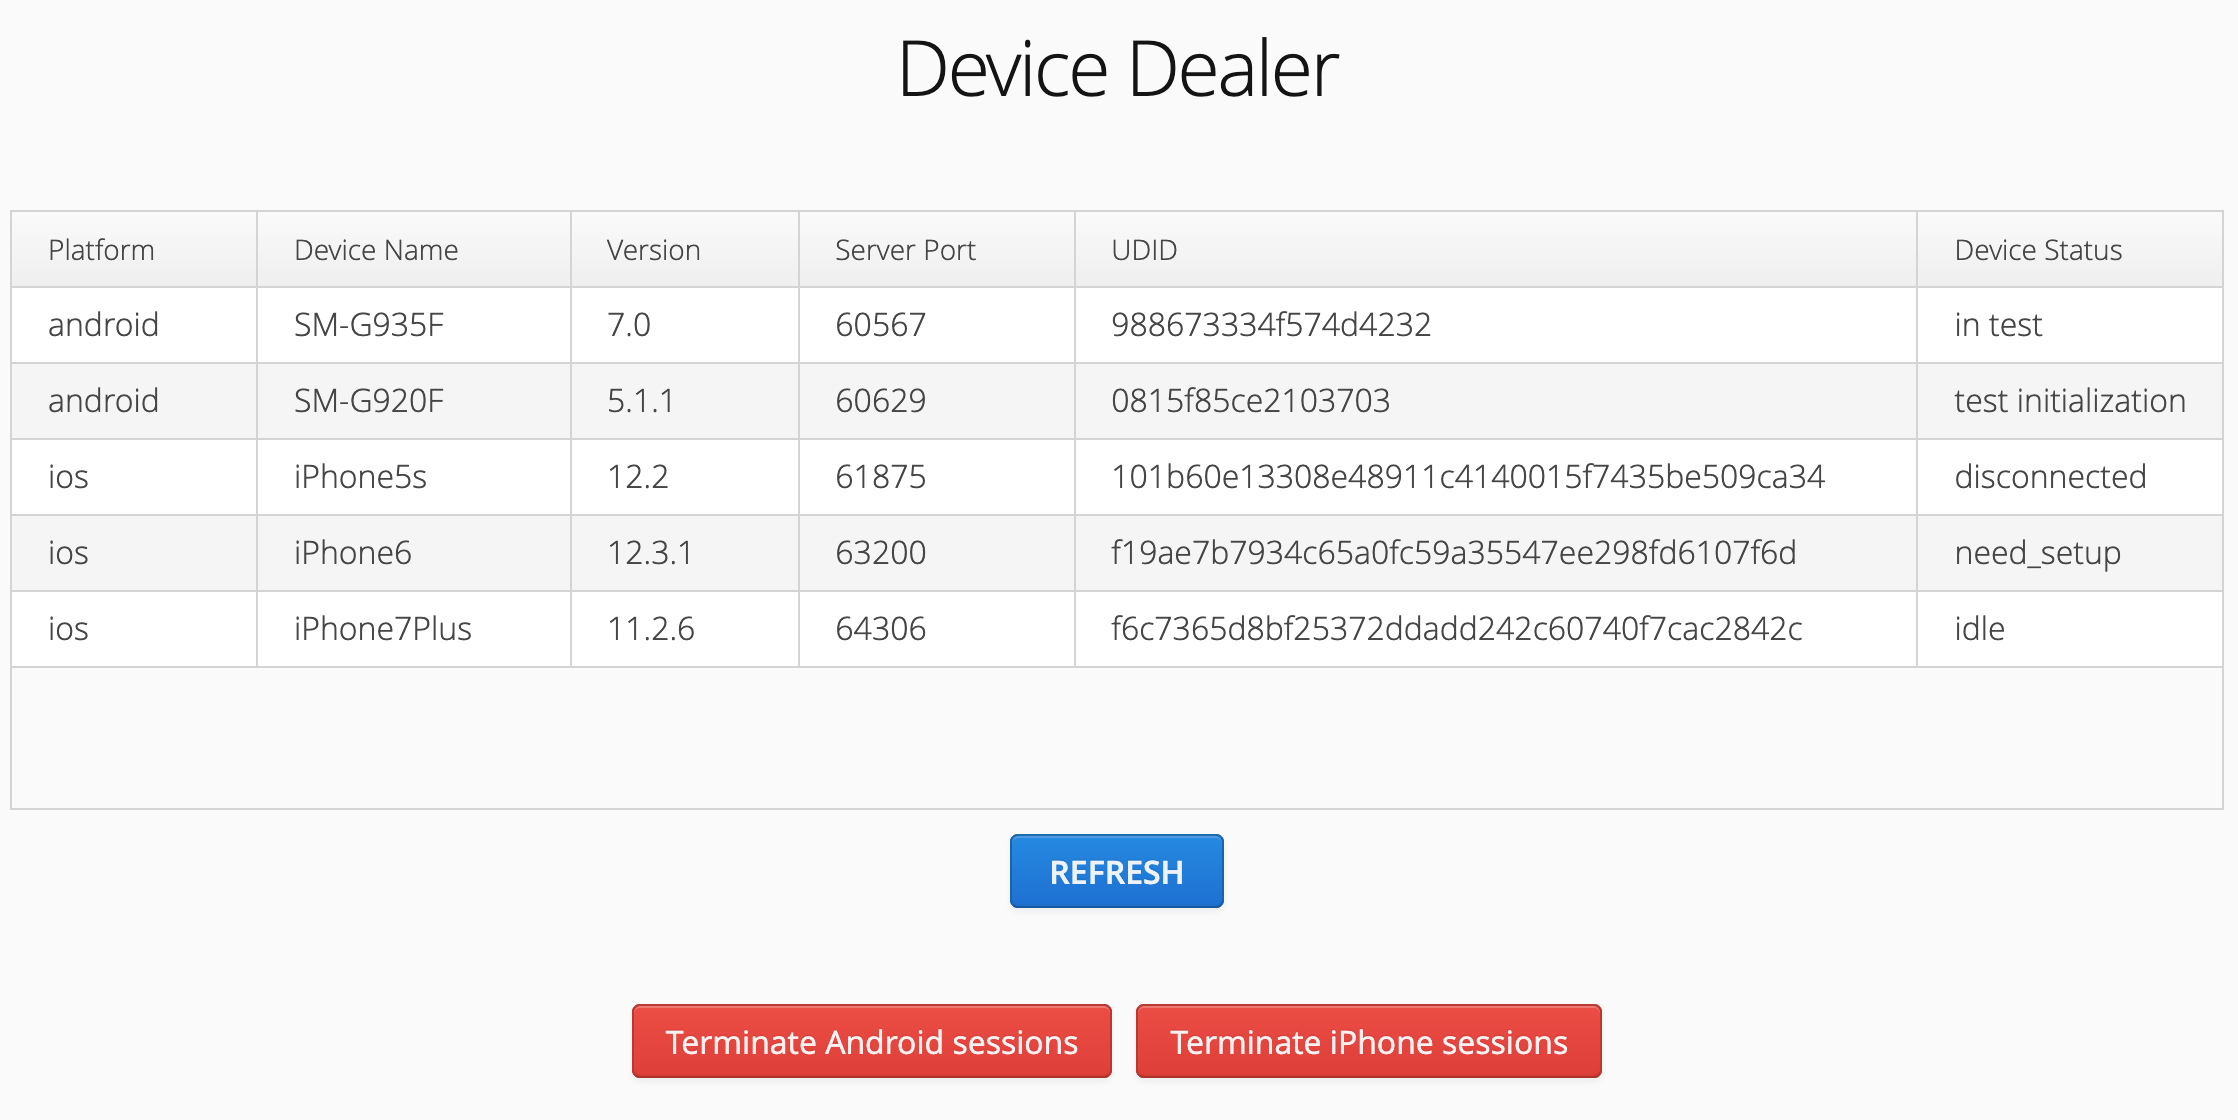 Device Dealer example screenshot